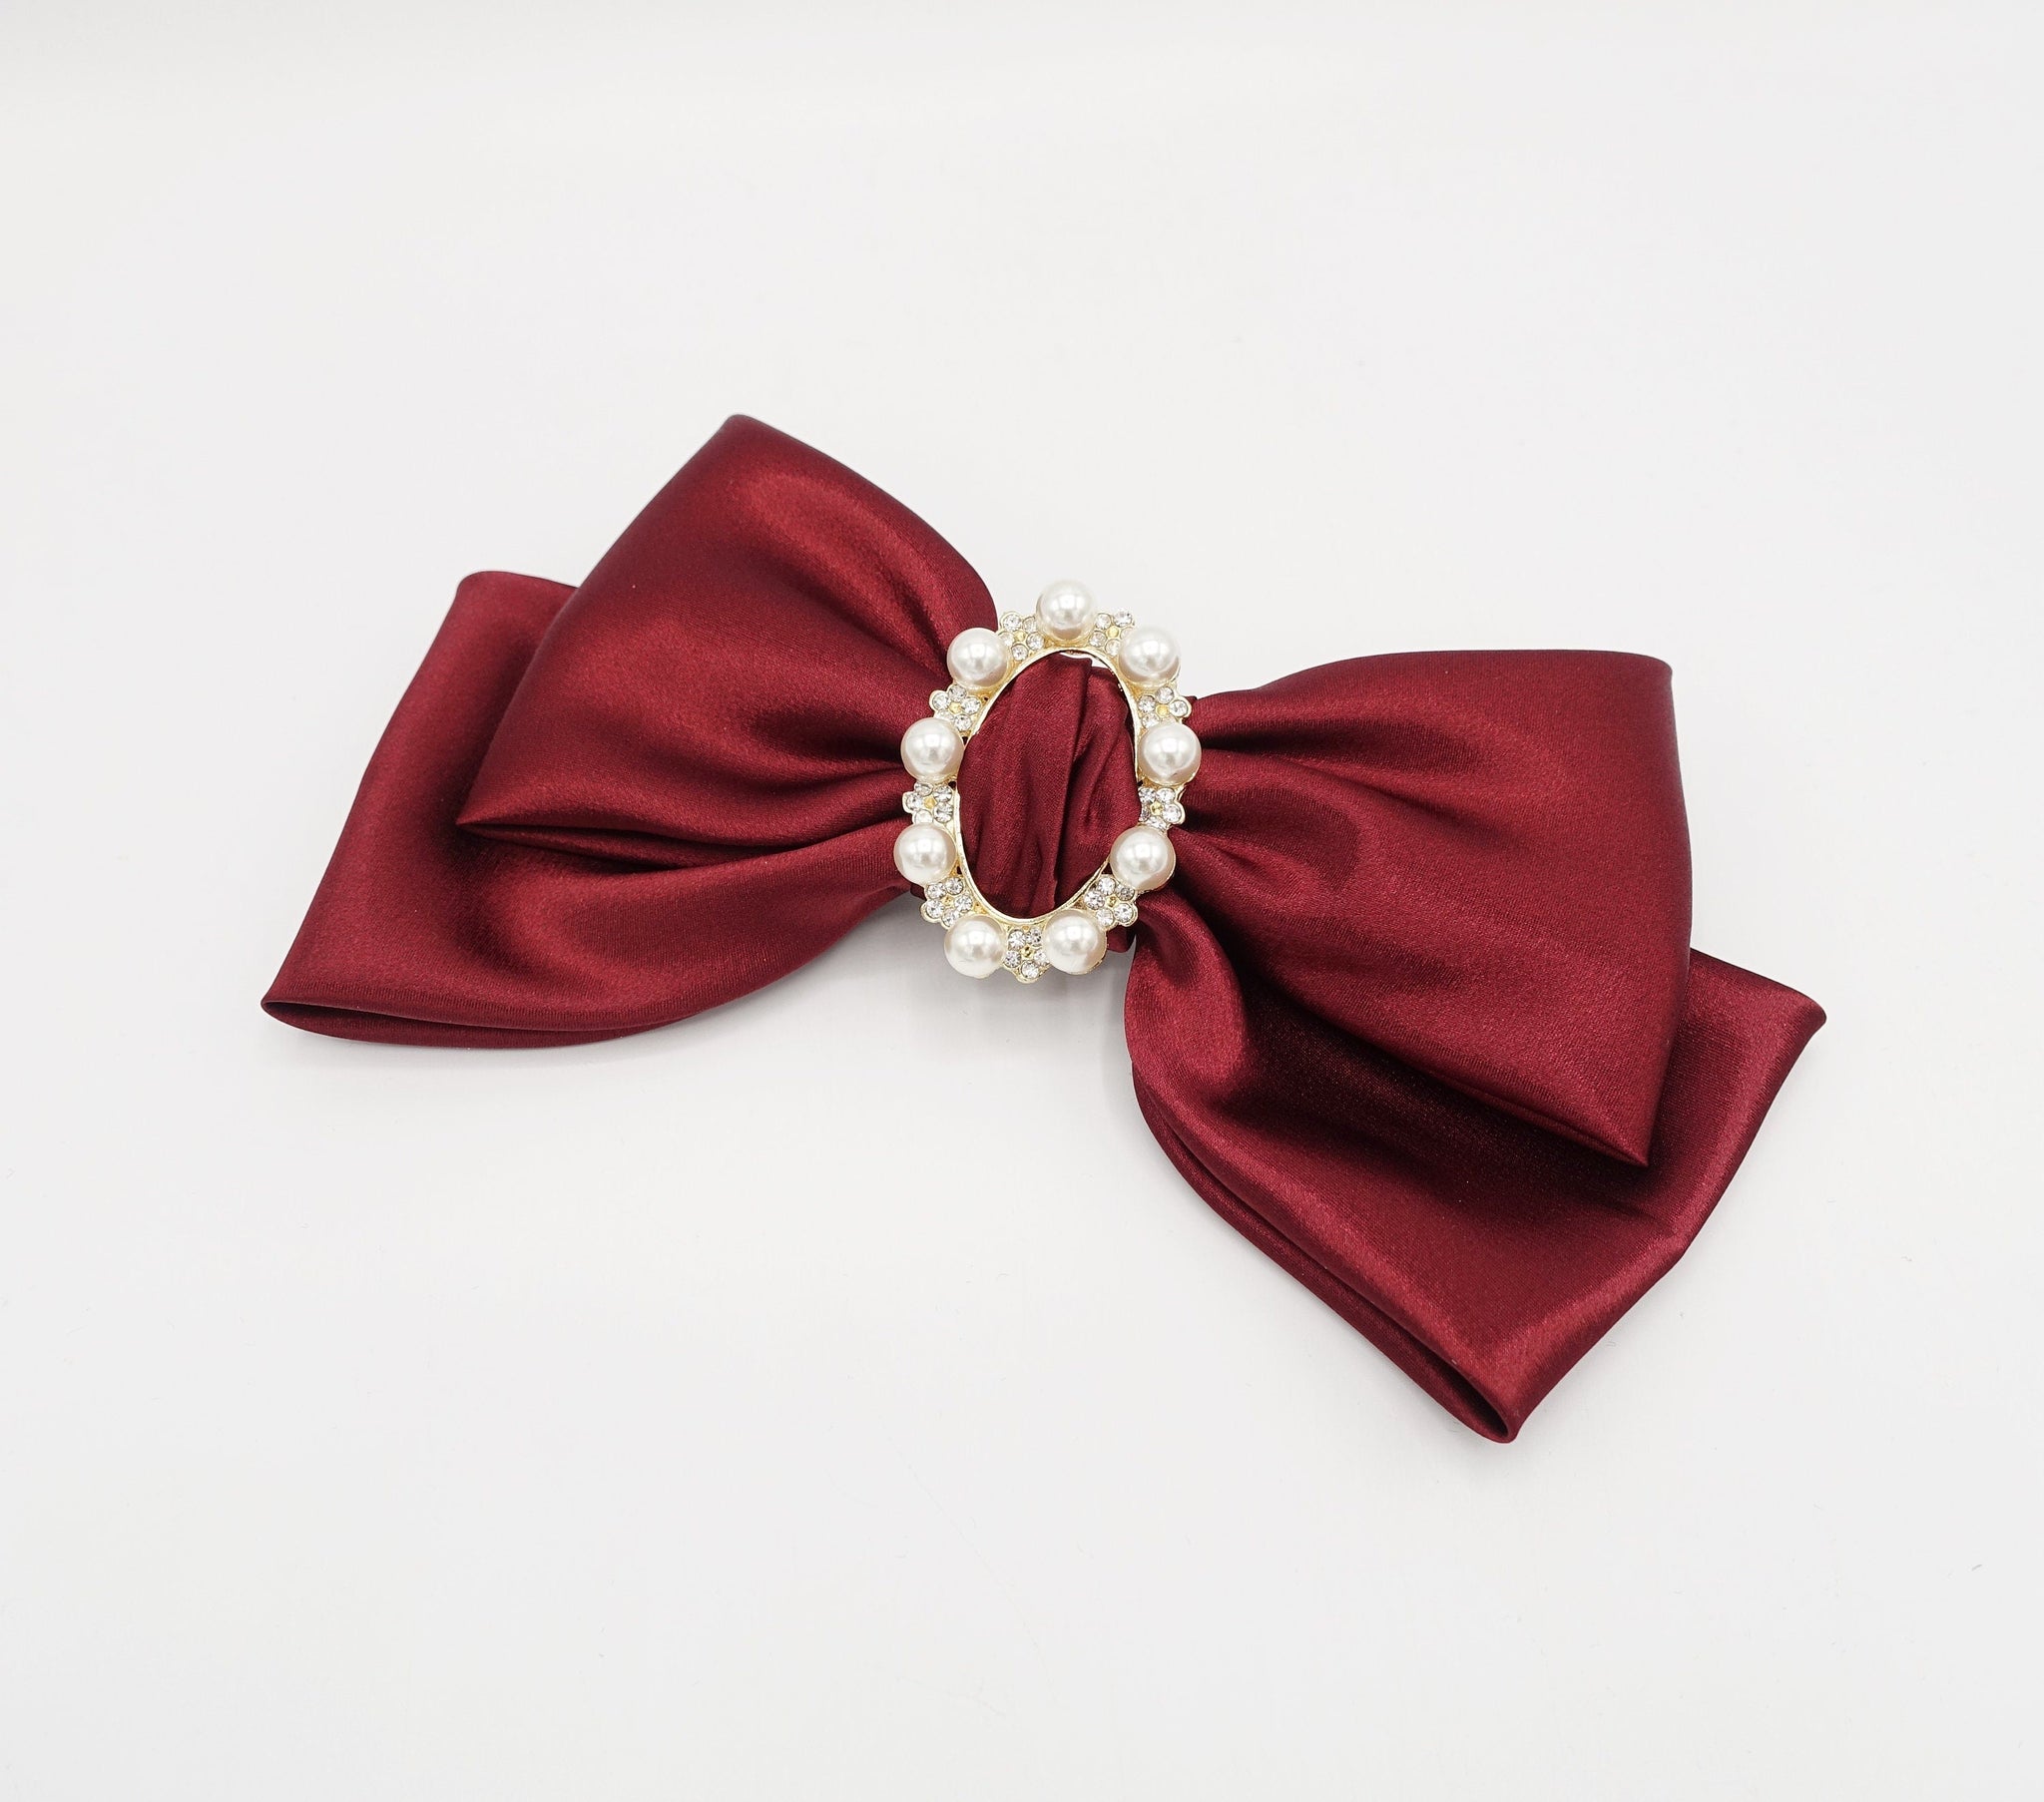 veryshine.com Barrette (Bow) pearl rhinestone buckle embellished satin hair bow